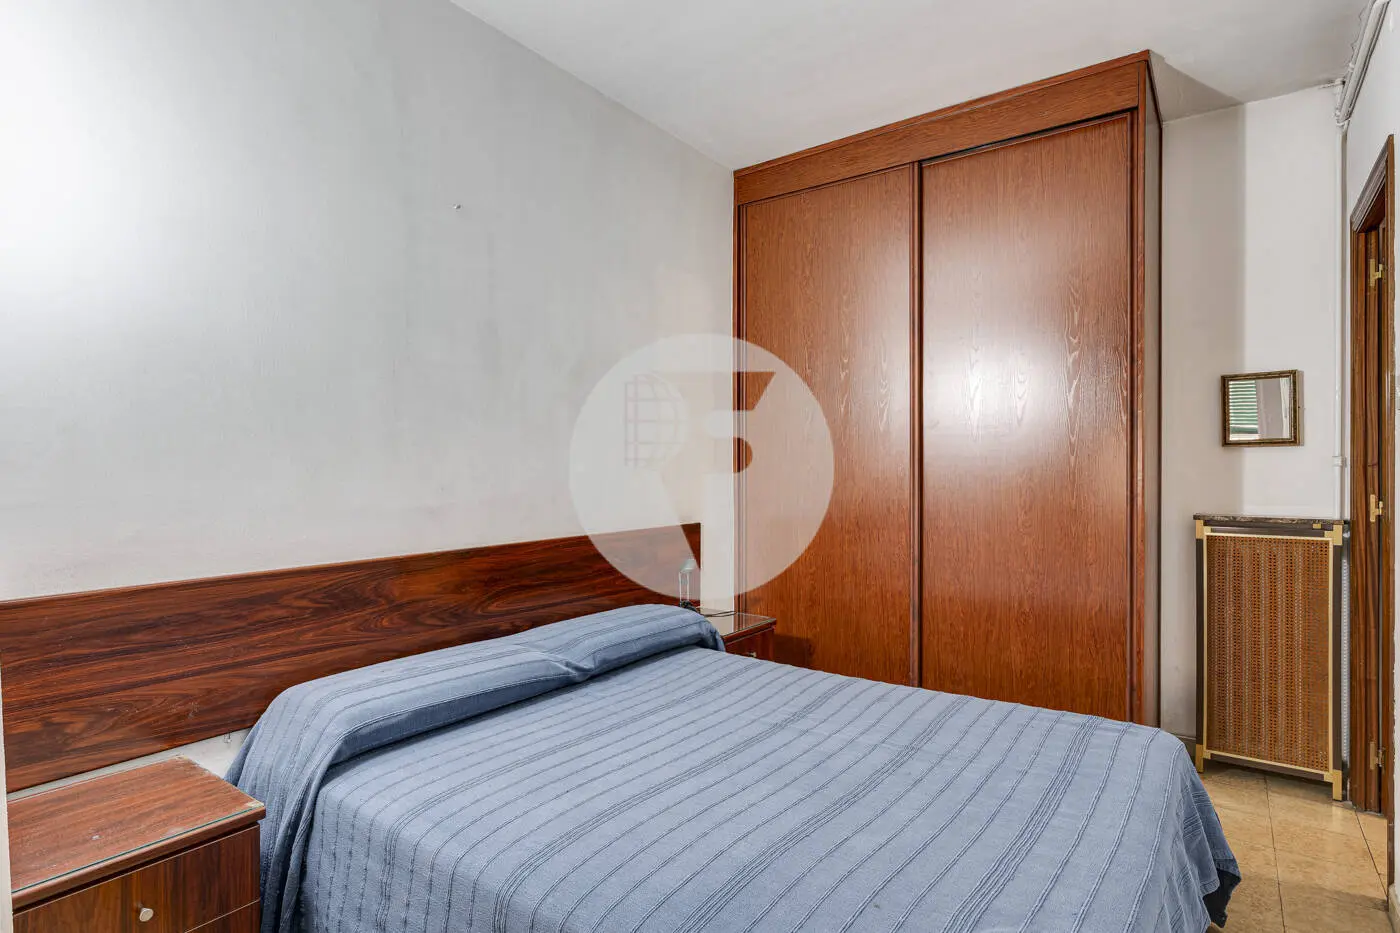 3-bedroom apartment located in the Nova Esquerra de l'Eixample neighborhood of Barcelona. 19